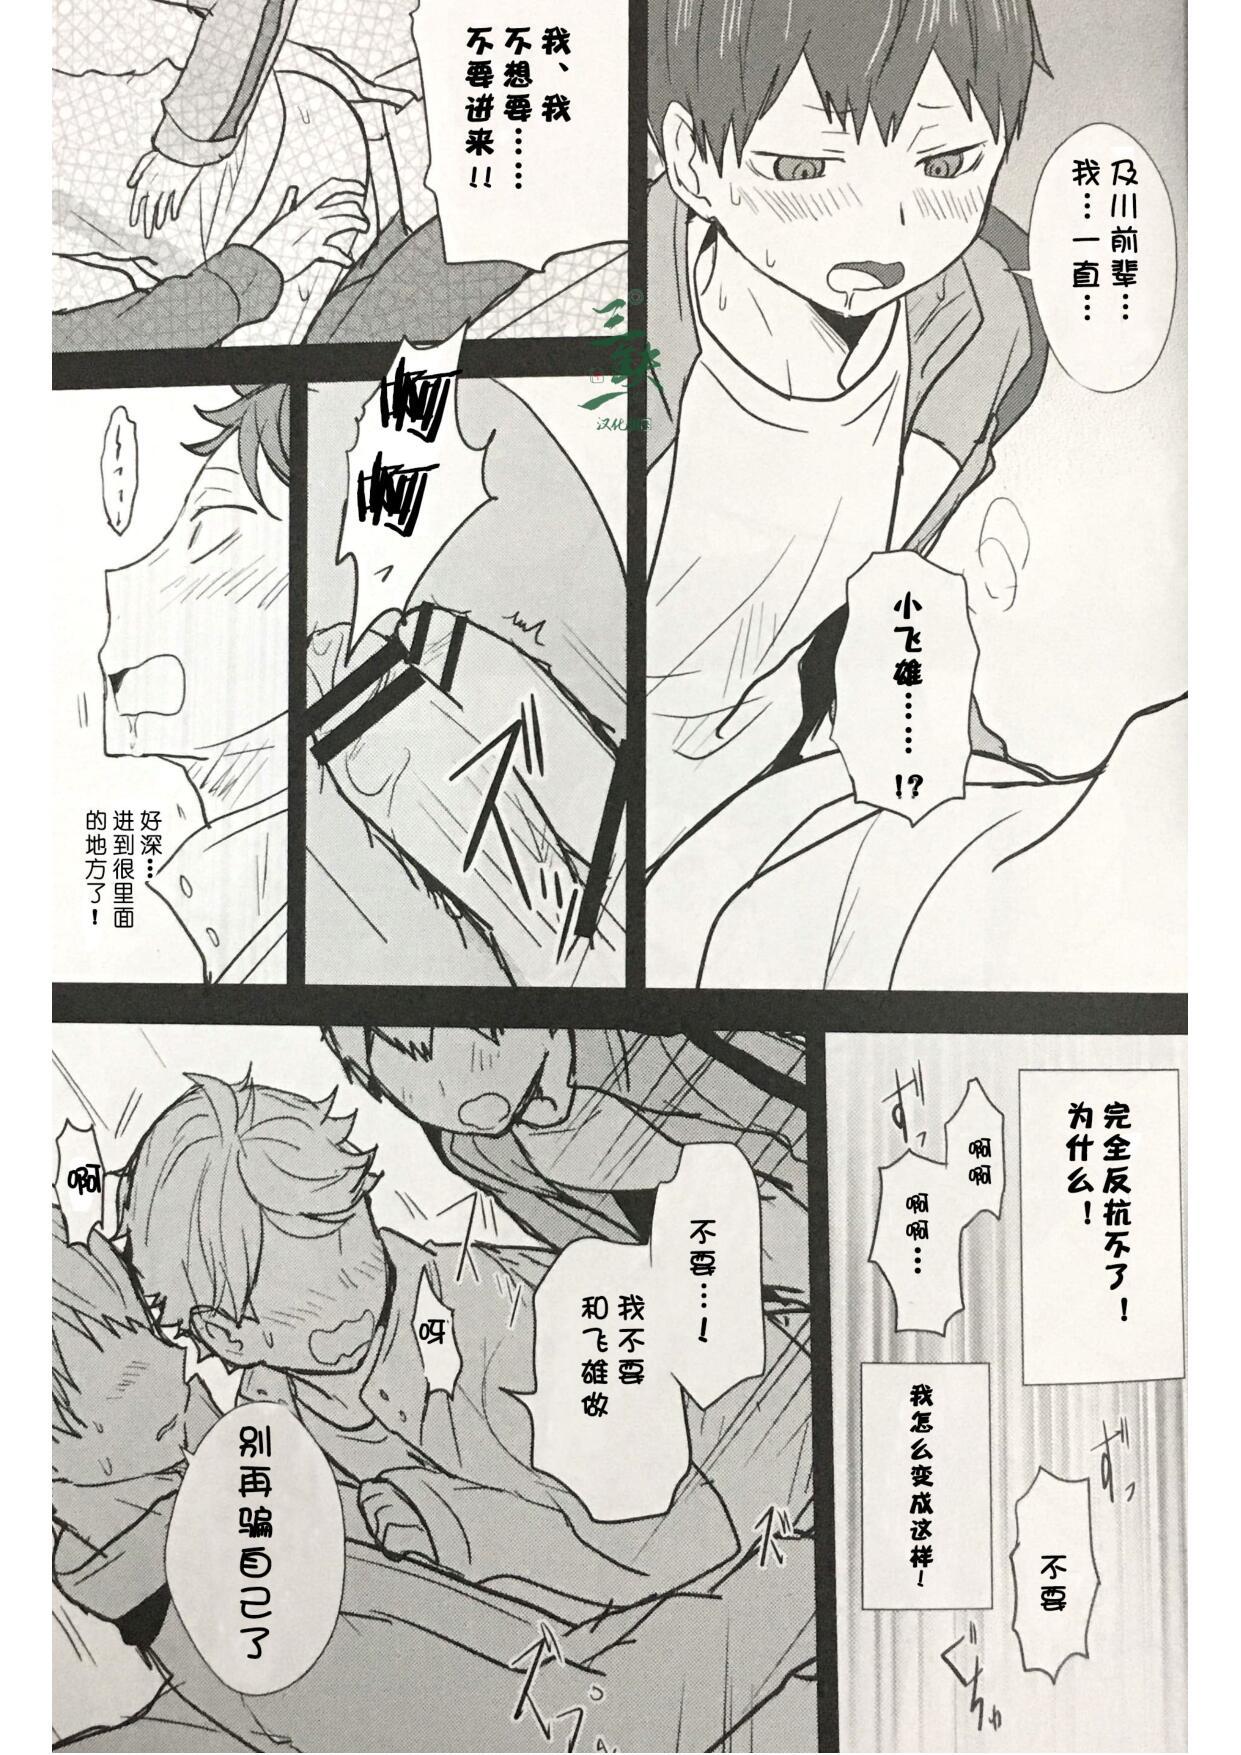 Boys lustful dream | 色欲之梦 - Haikyuu Woman - Page 6